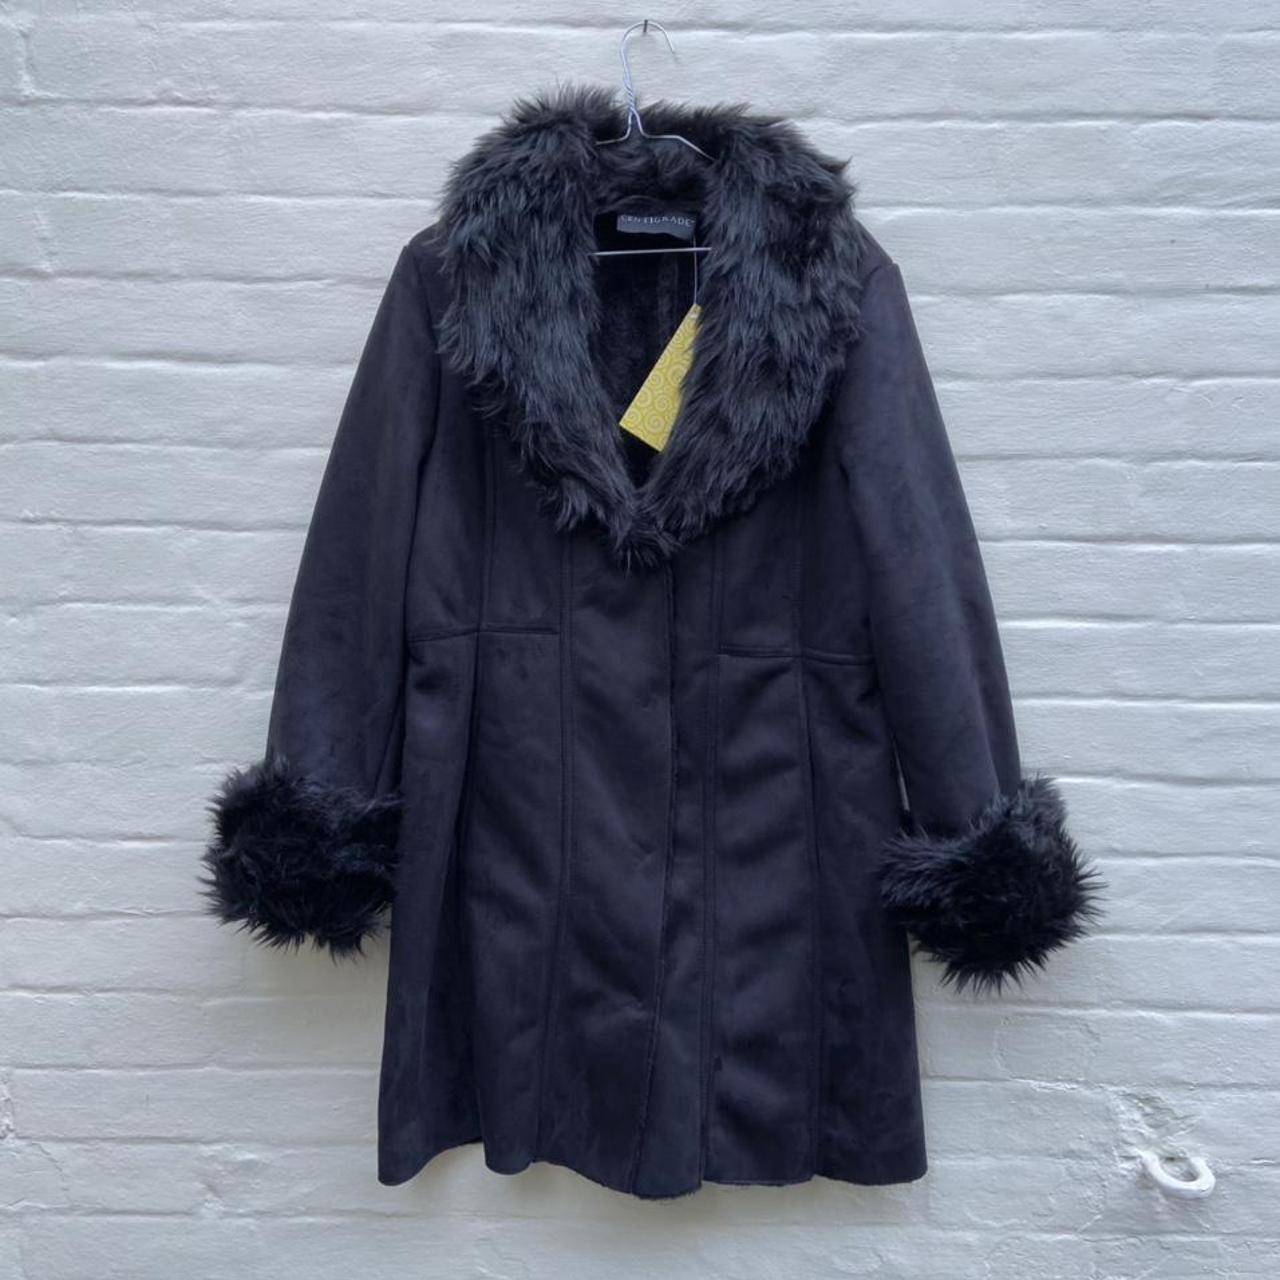 Black afghan coat - faux suede & faux fur trim -... - Depop